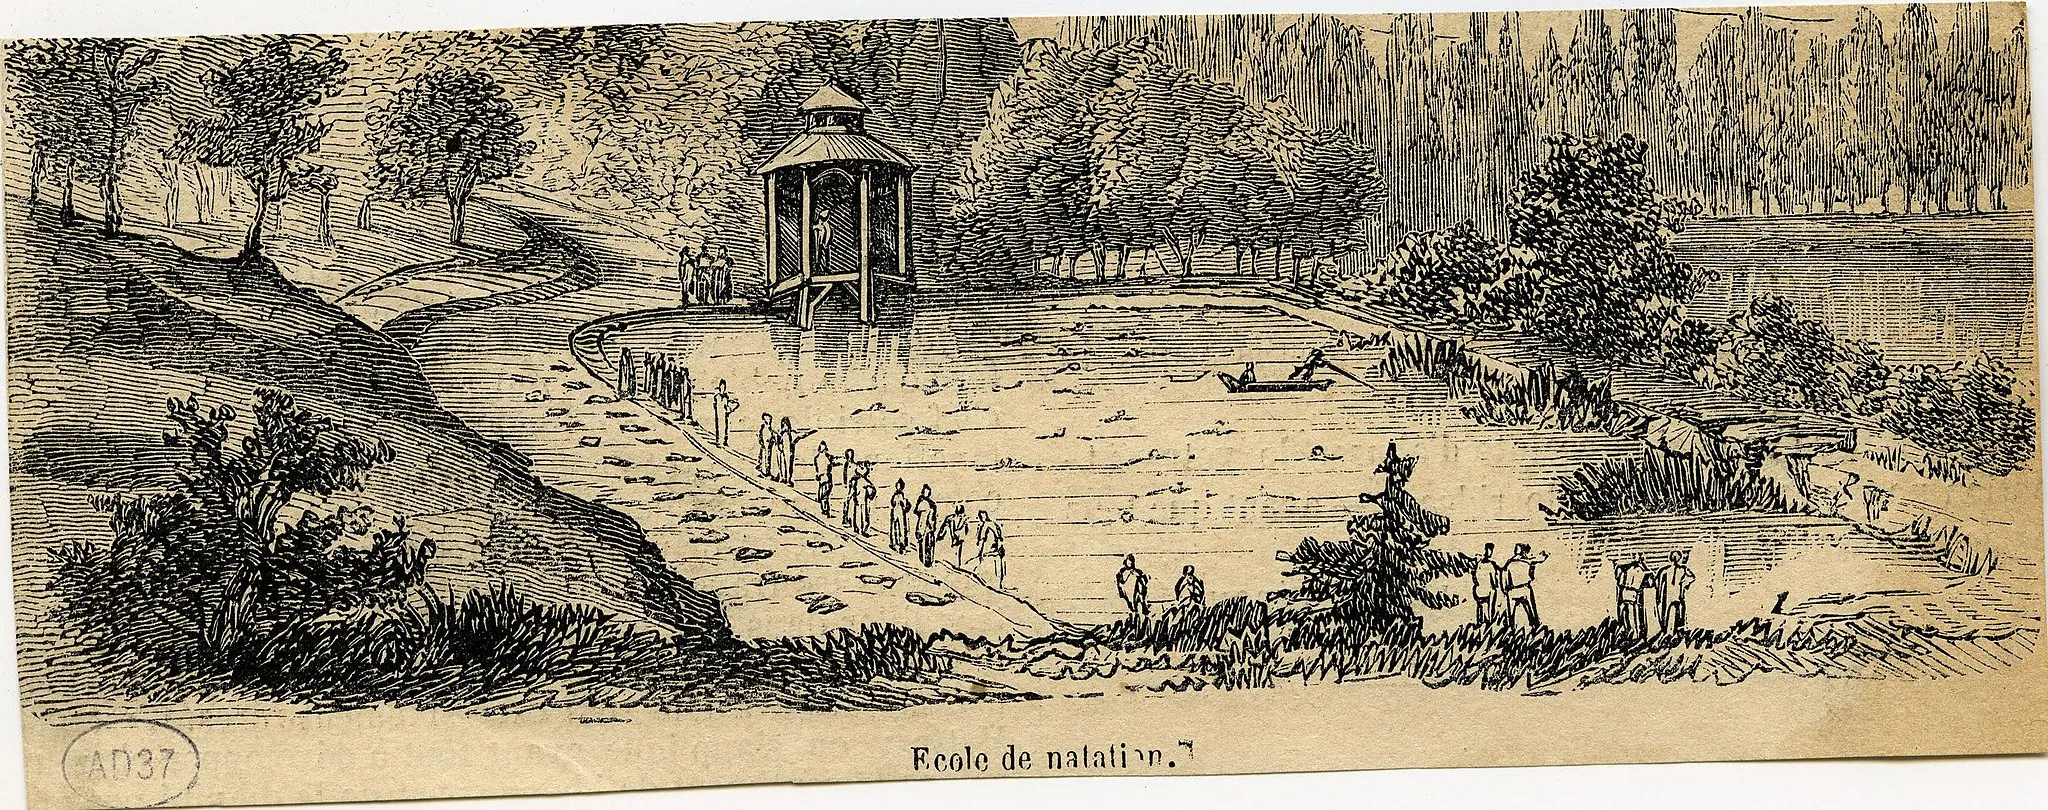 Photo showing: Colonie de Mettray - école de natation